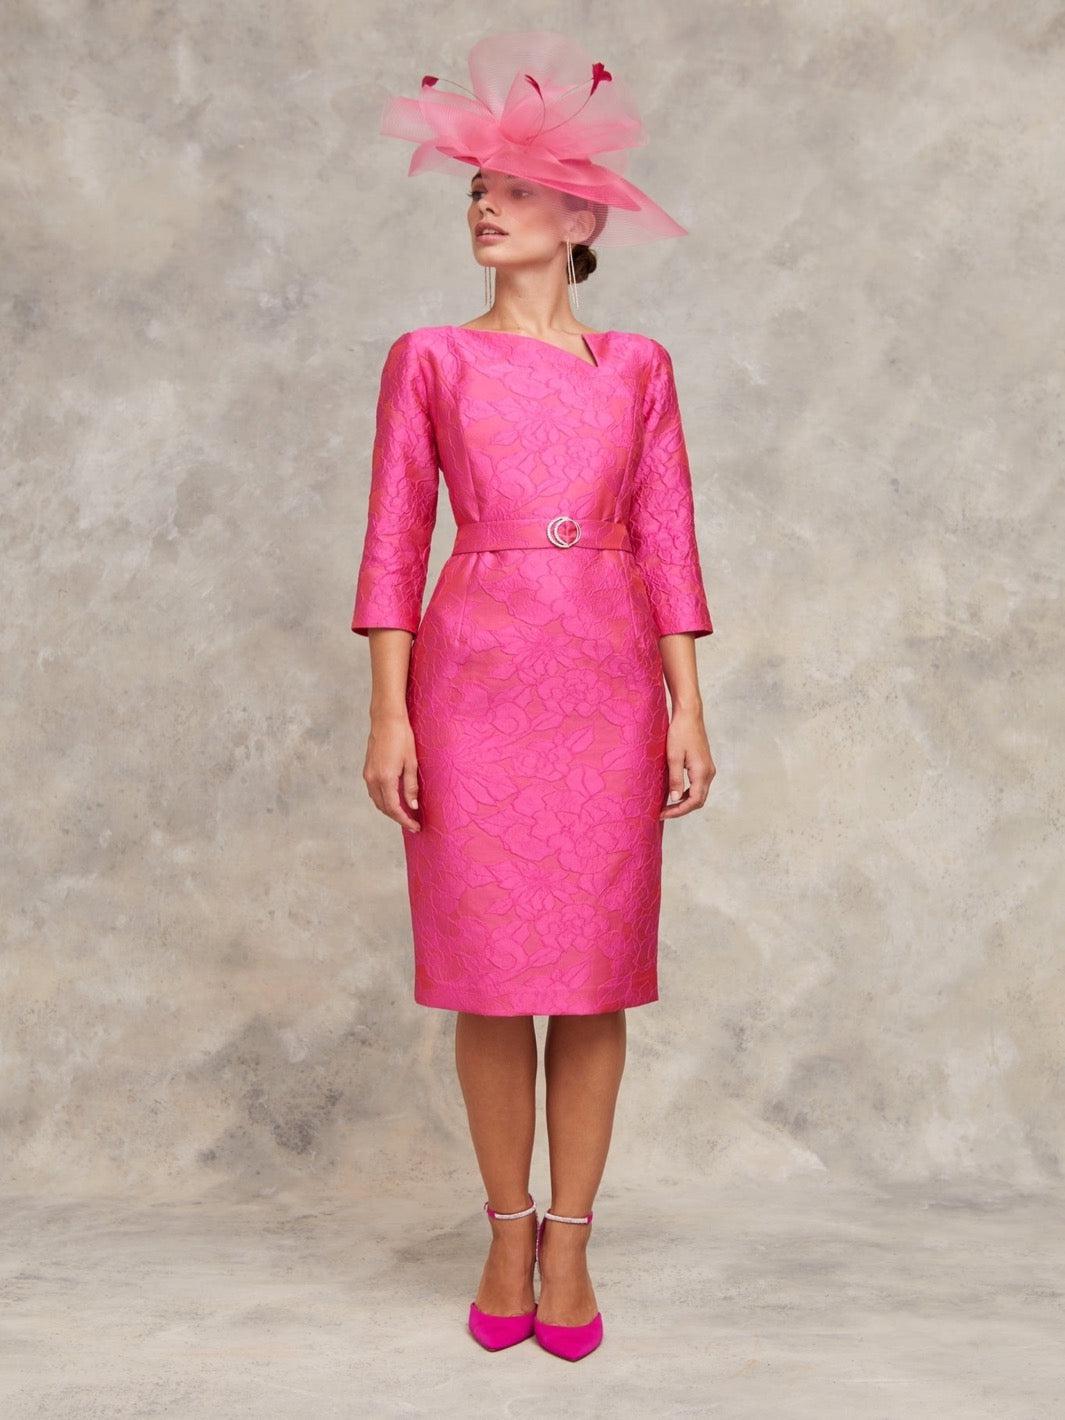 Luis Civit Dress #D833 - Pink-Mother of the bride- mother of the groom -Nicola Ross